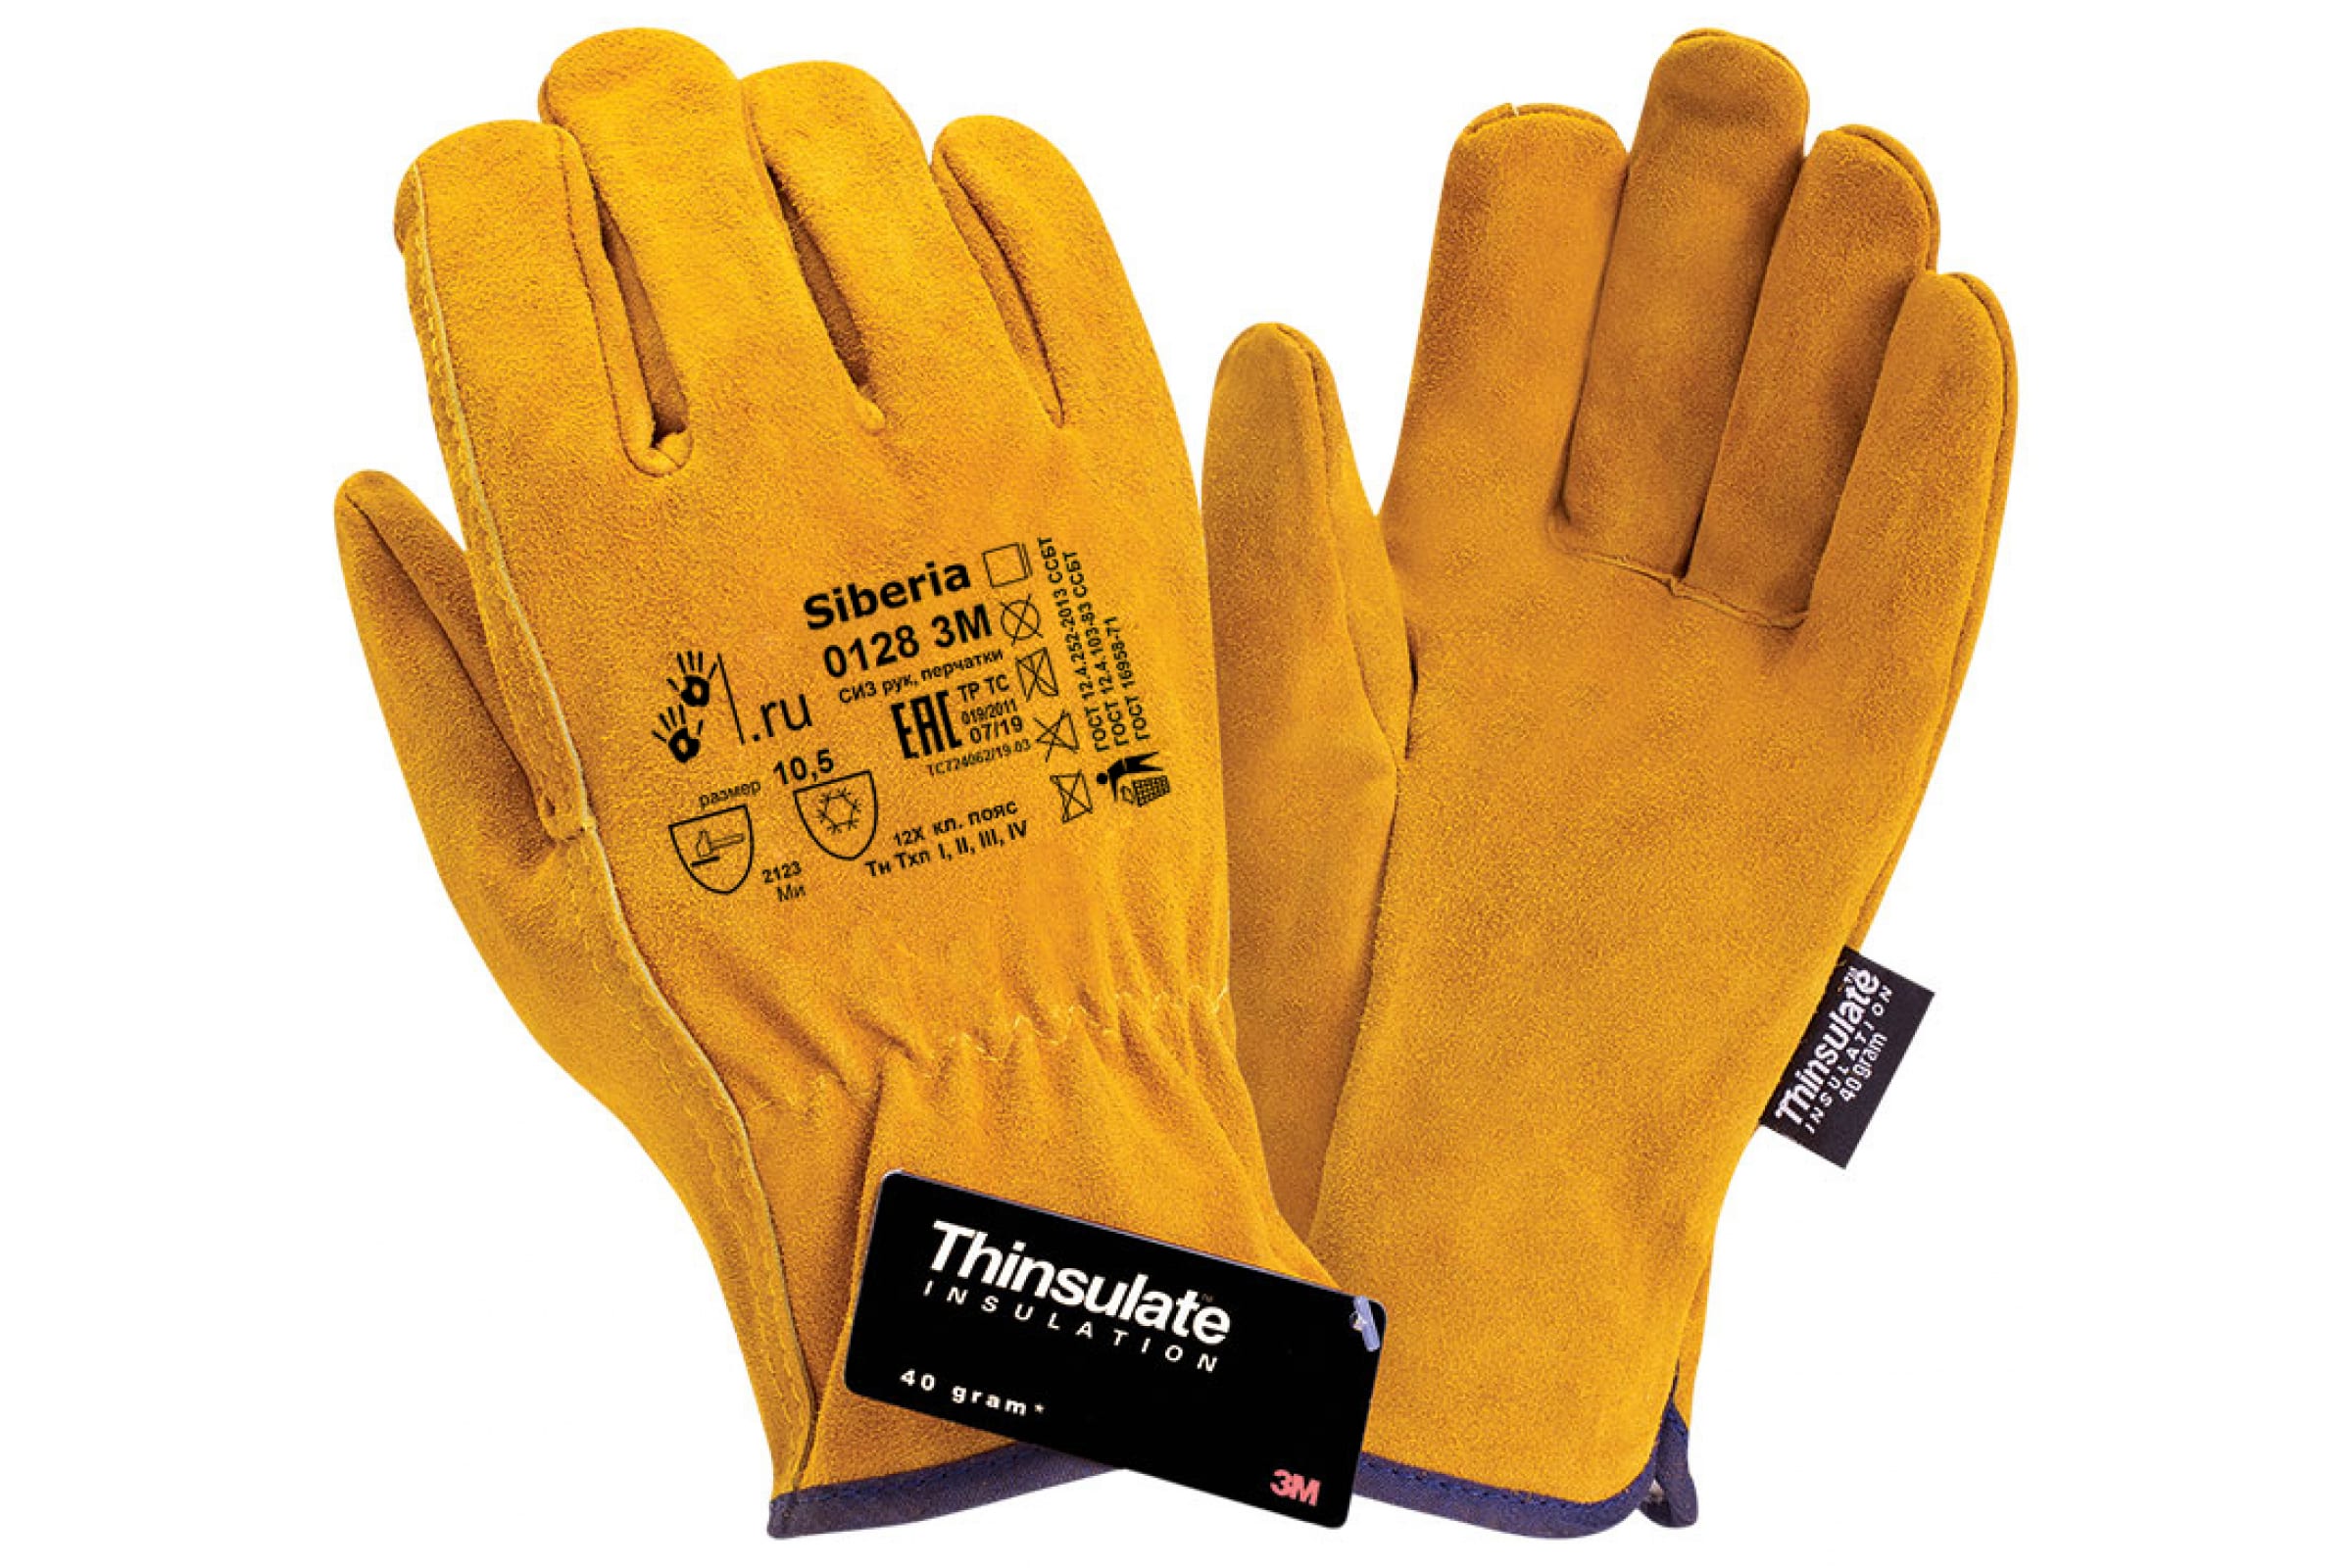 2Hands Перчатки утепленные, спилок КРС/Thinsulate 3М 0128 3M Siberia перчатки 2hands